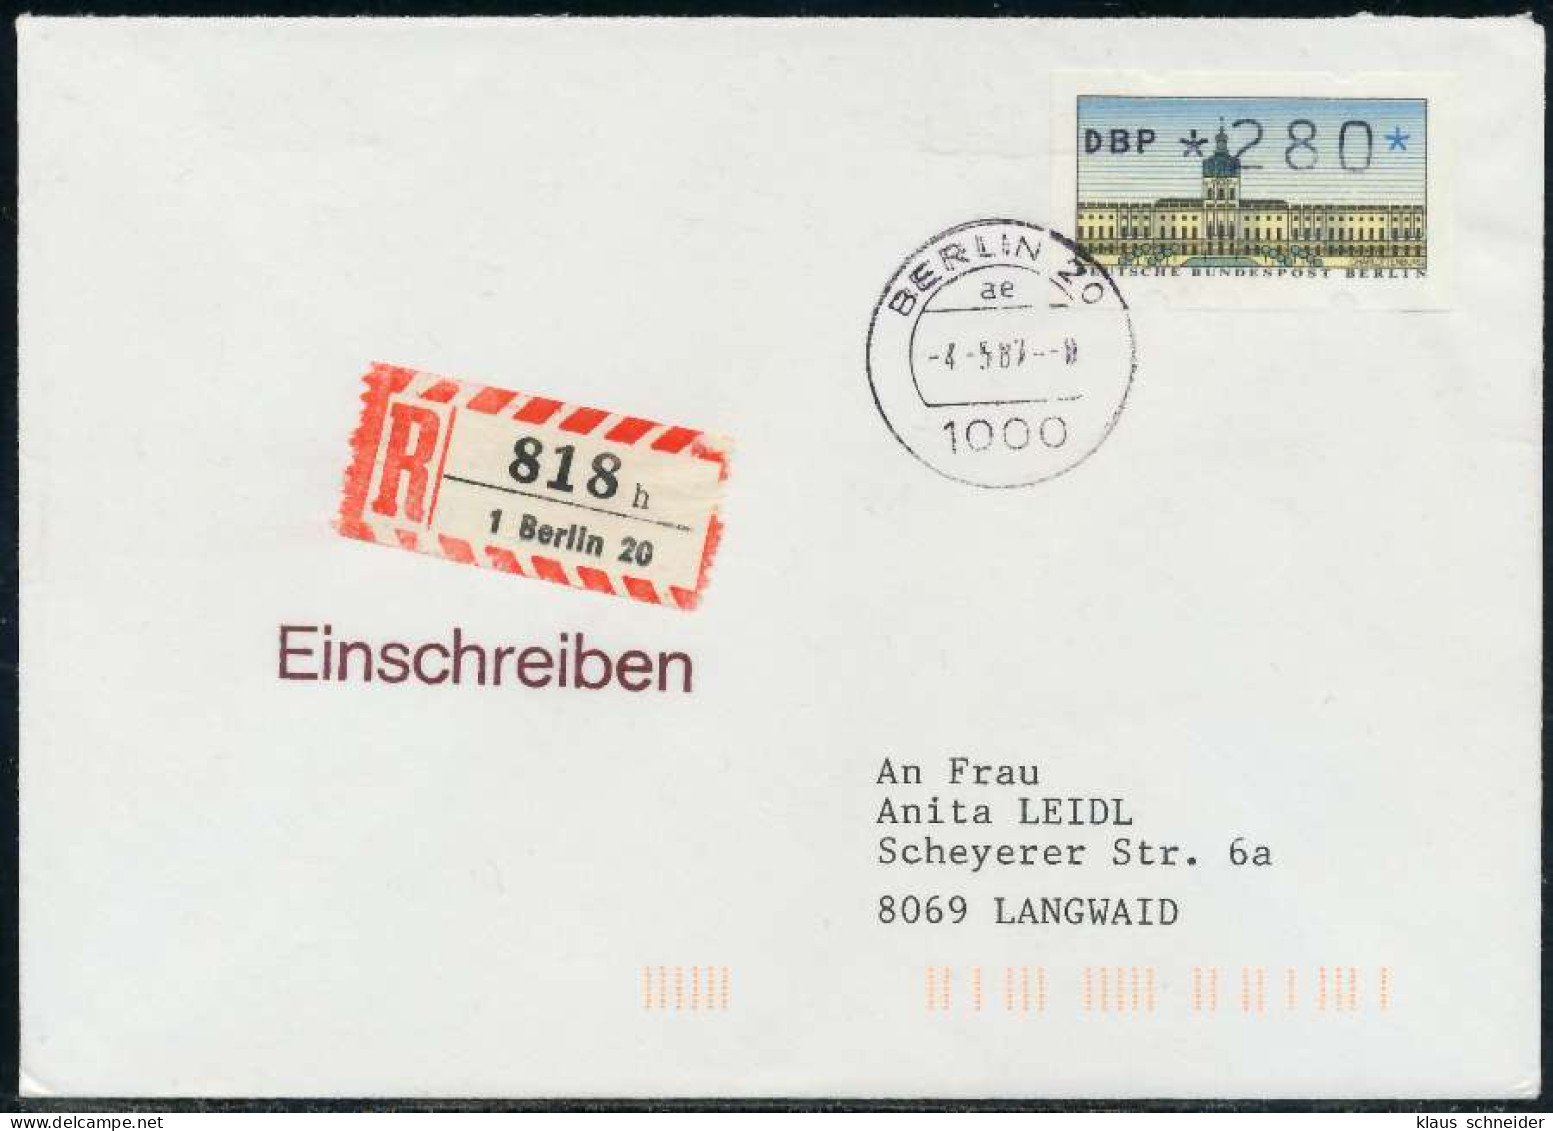 BERLIN ATM 1-280 BRIEF EINSCHREIBEN FDC X7E469A - Covers & Documents